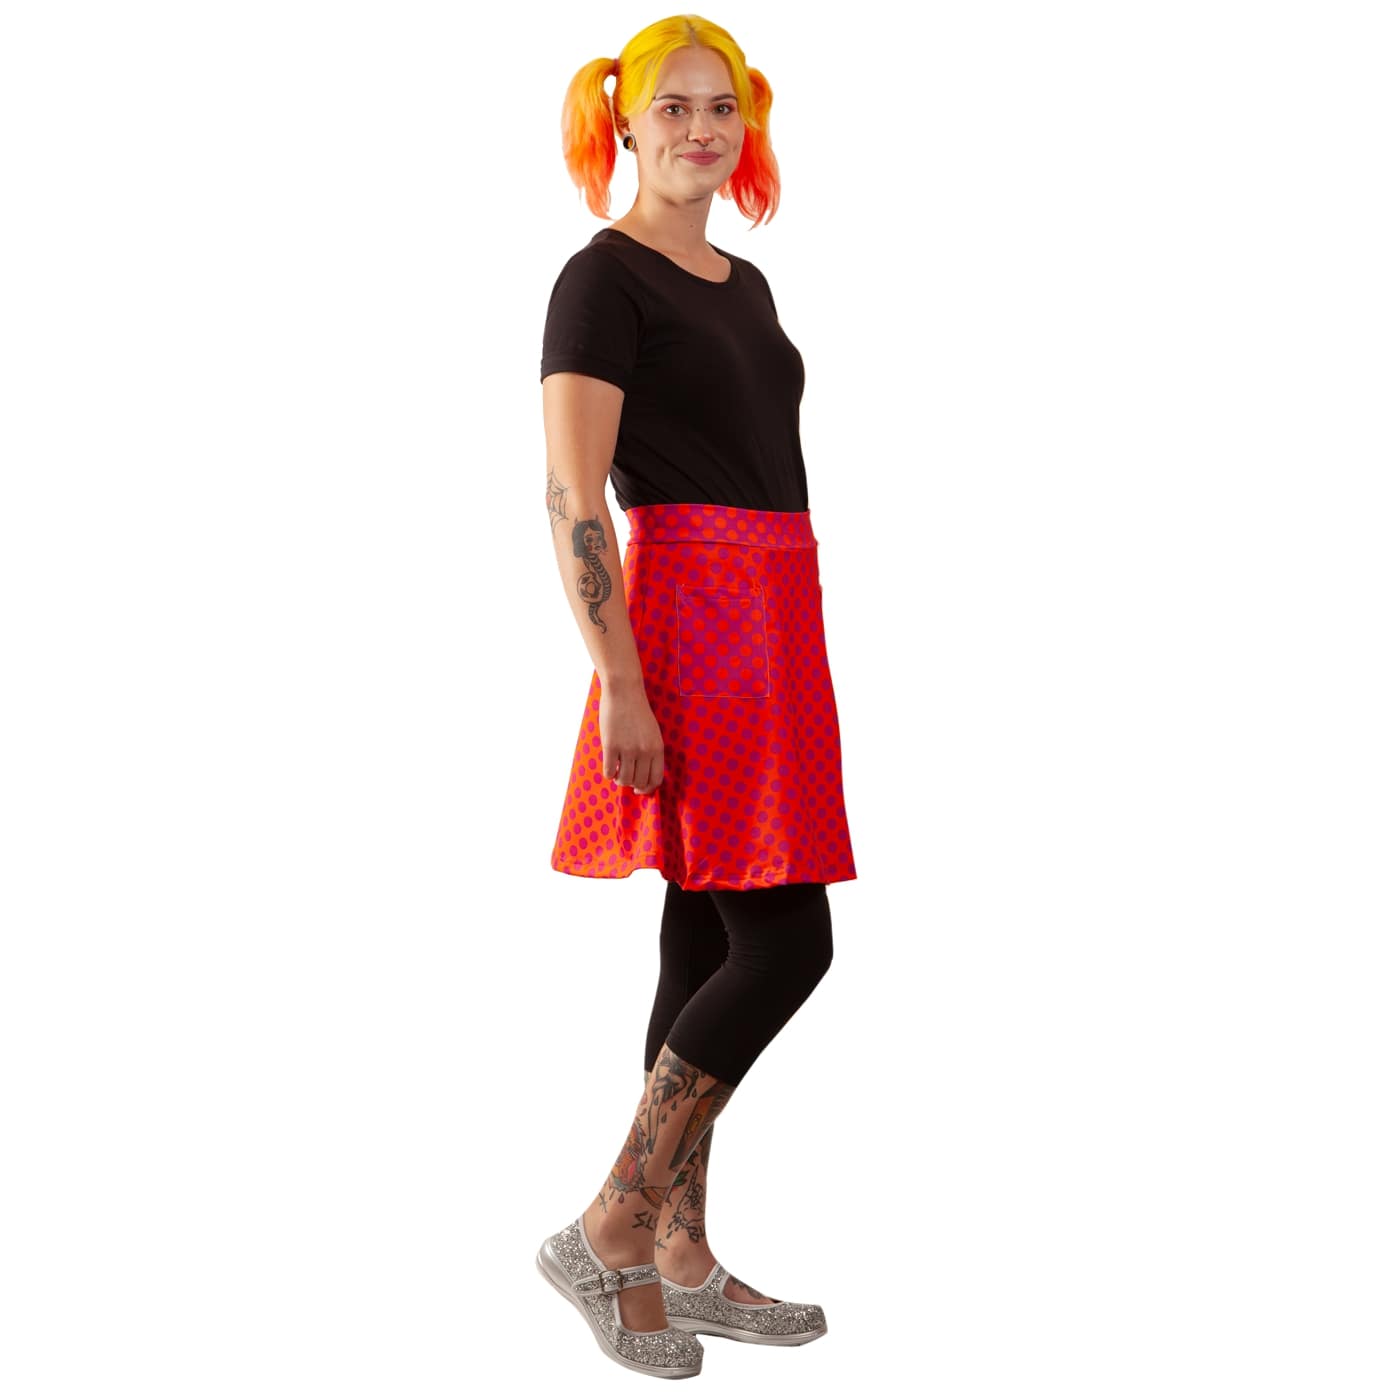 Sunrise Short Skirt by RainbowsAndFairies.com (Purple Orange - Polka Dots - Psychedelic - Skirt With Pockets - Aline Skirt - Cute Flirty - Vintage Inspired) - SKU: CL_SHORT_SUNRS_ORG - Pic 04